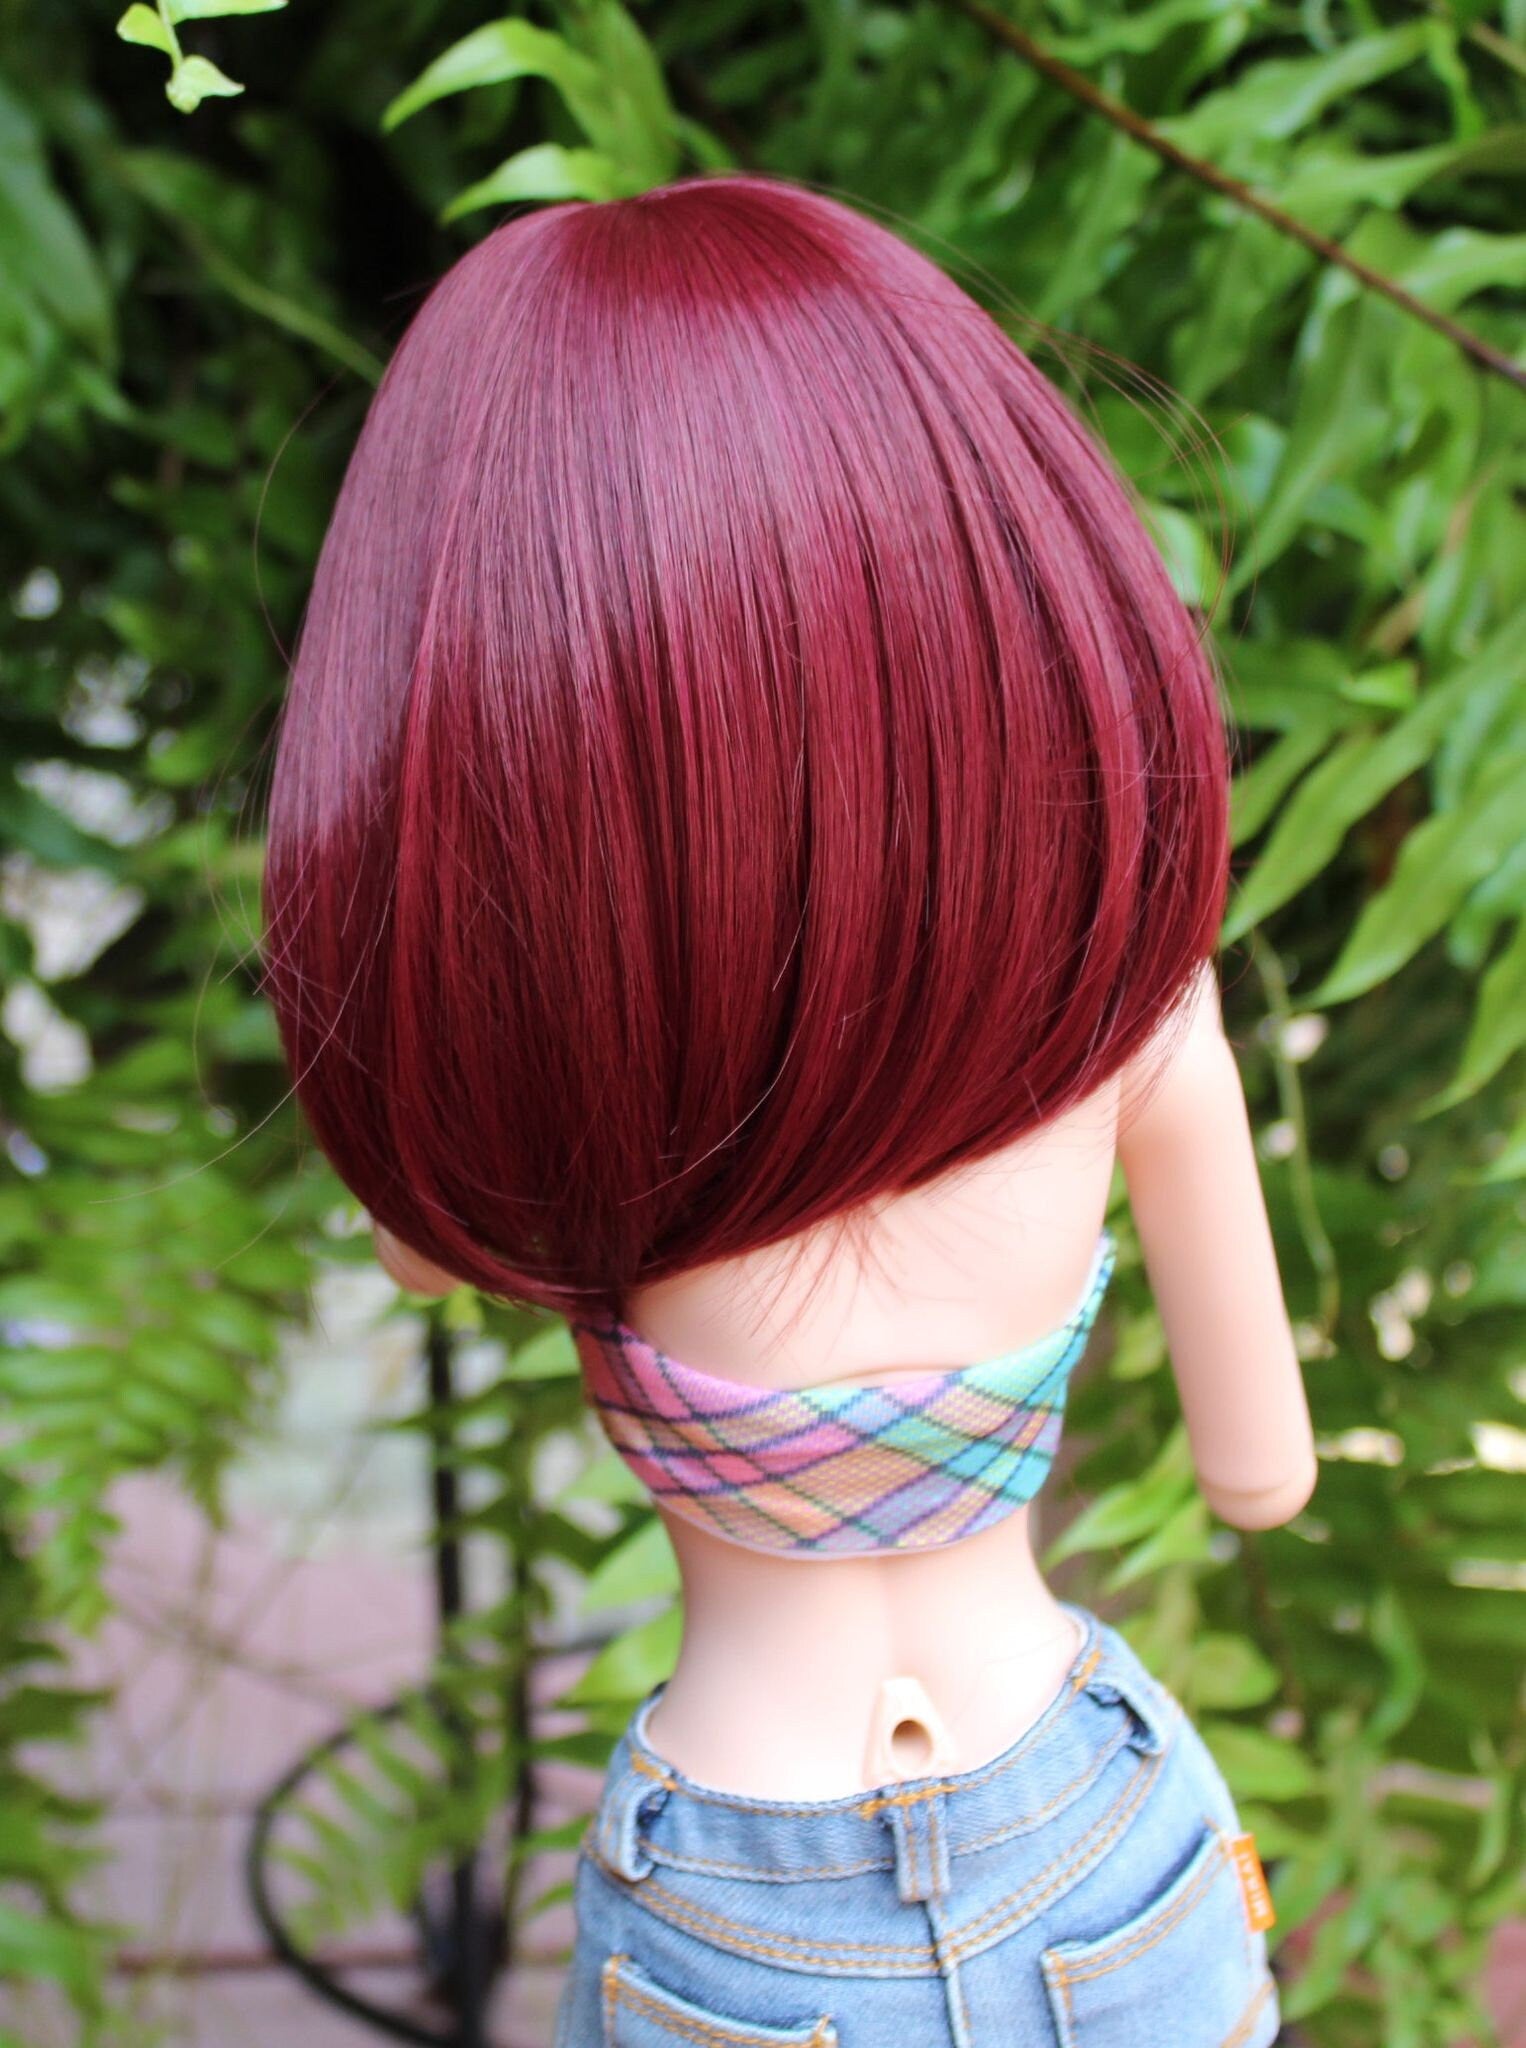 Custom doll Wig for Smart Dolls- Heat Safe - Tangle Resistant- 8.5" head size of Bjd, SD, Dollfie Dream dolls  deep red